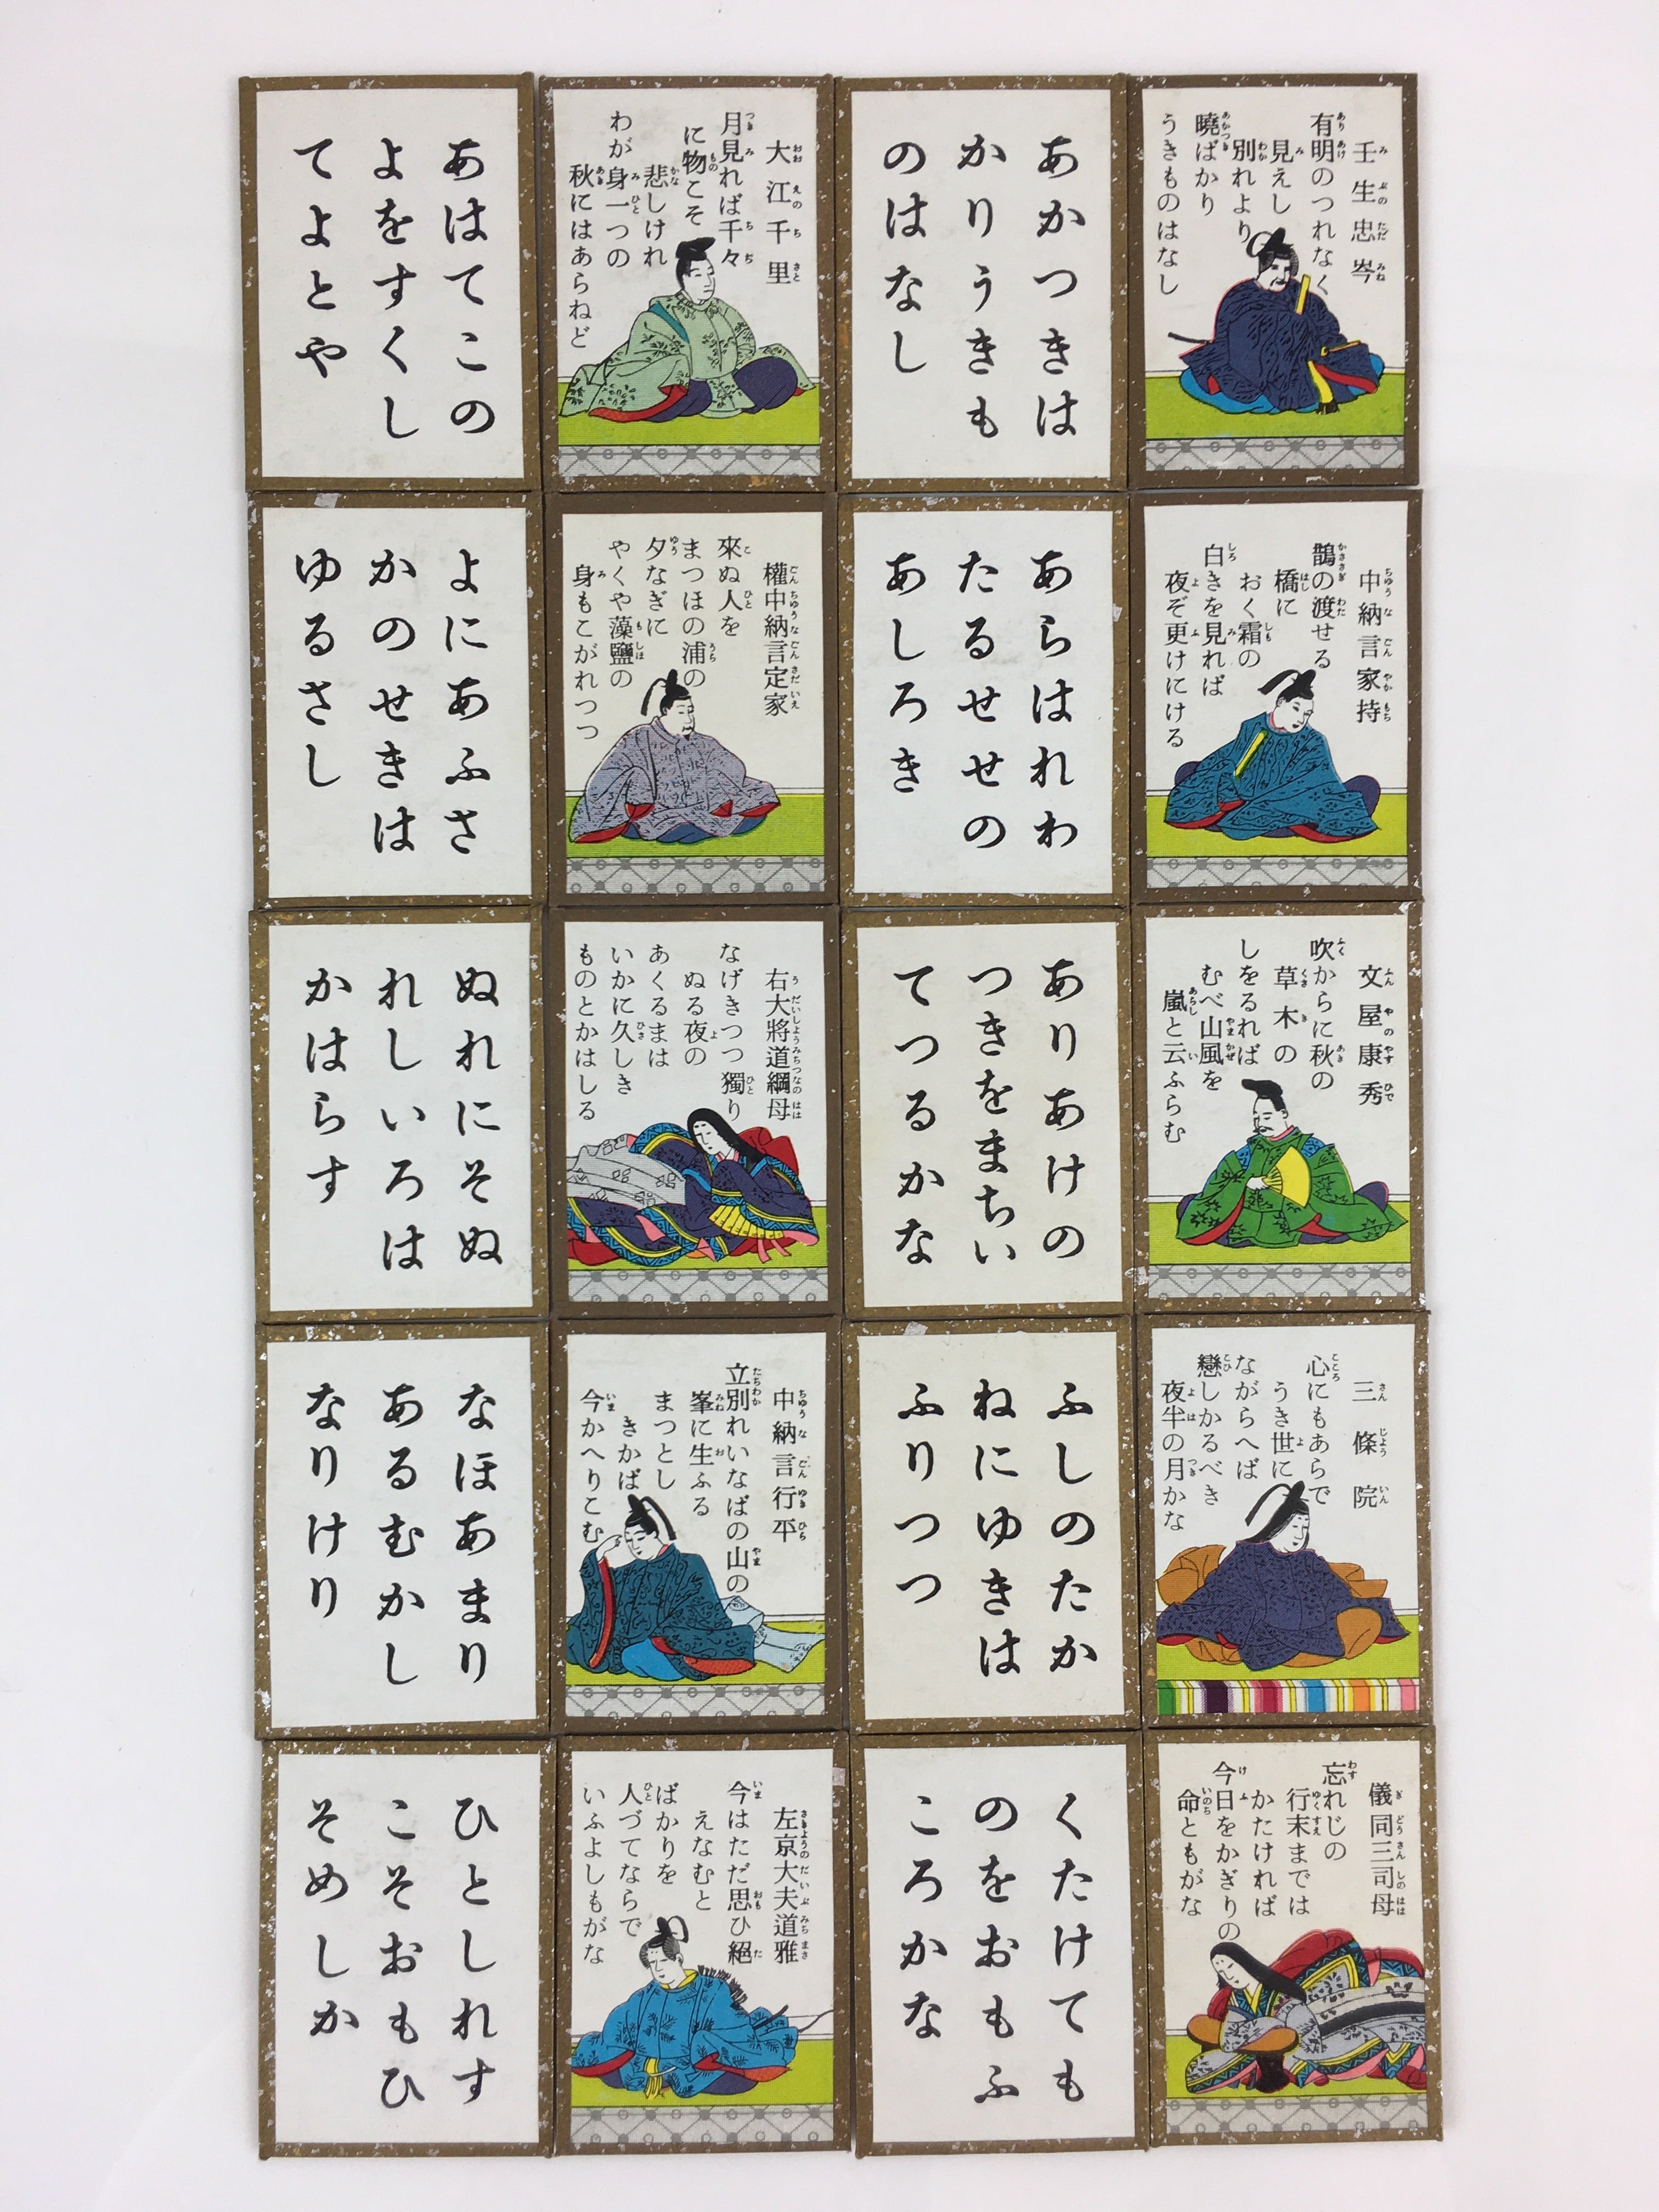 Japanese Hyakunin Isshu Vtg Traditional Playing Cards 100 Poem Game JK389